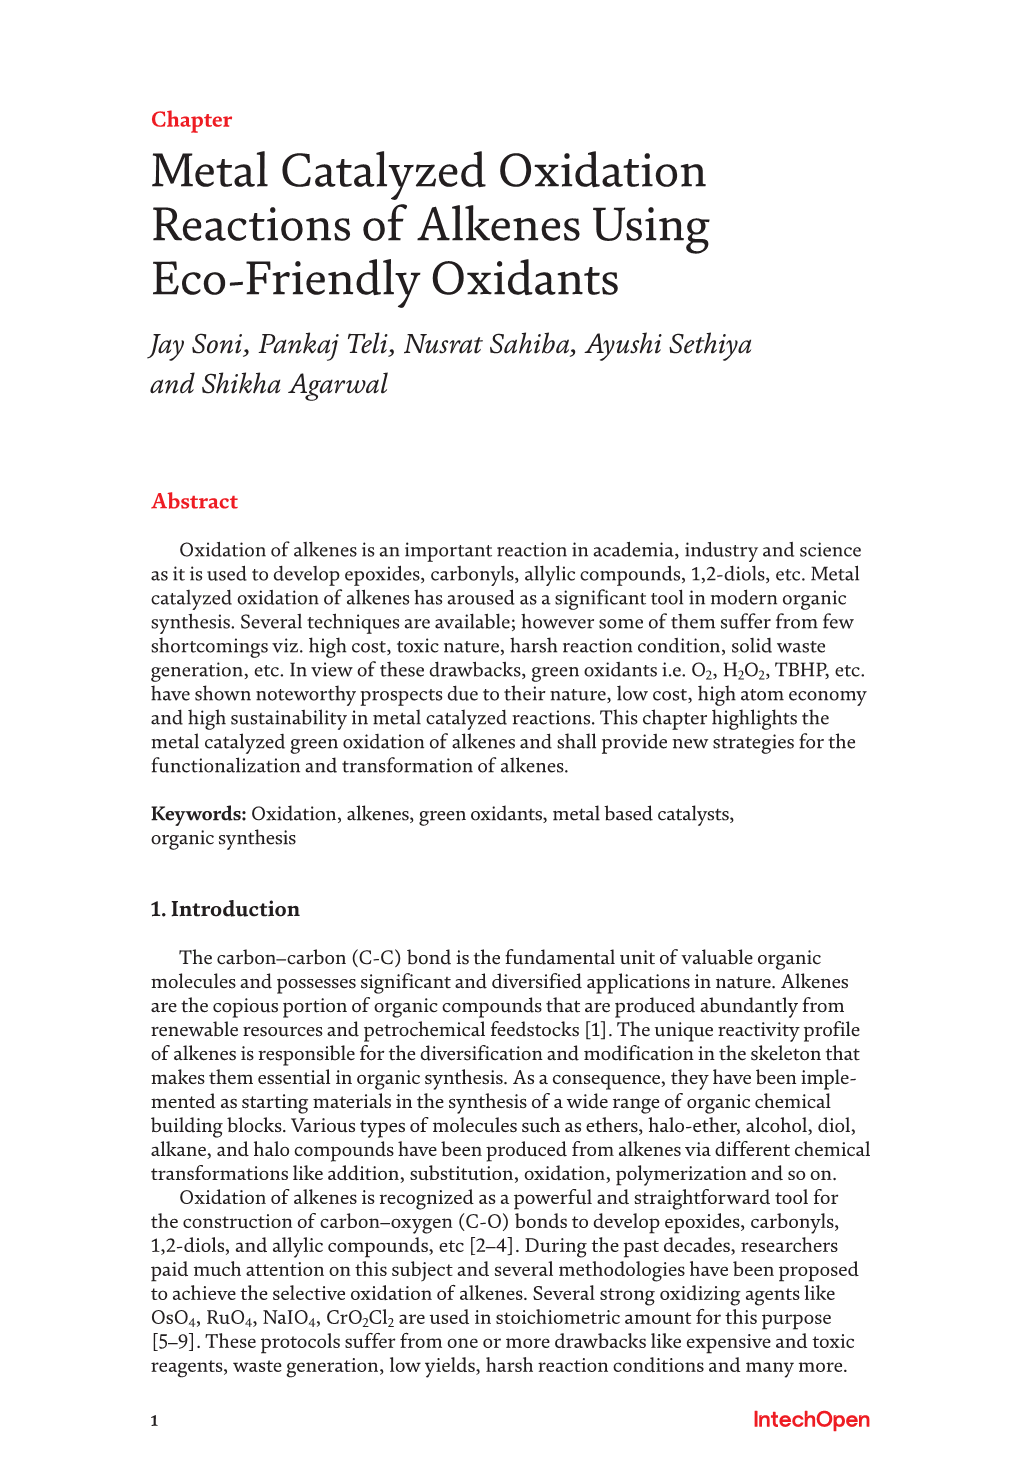 Metal Catalyzed Oxidation Reactions of Alkenes Using Eco-Friendly Oxidants Jay Soni, Pankaj Teli, Nusrat Sahiba, Ayushi Sethiya and Shikha Agarwal